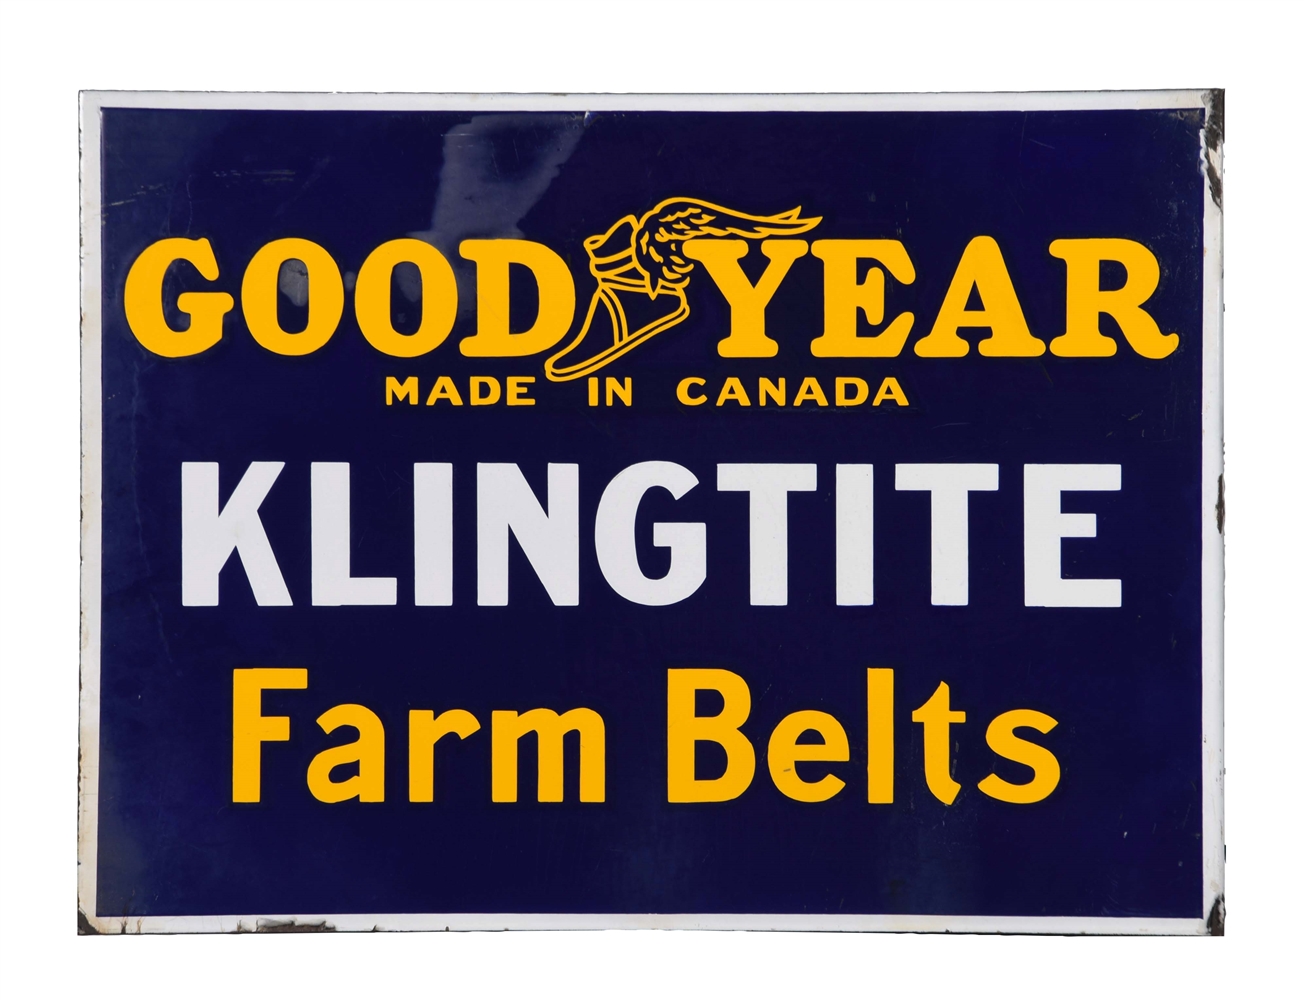 GOODYEAR KLINGTITE FARM BELTS PORCELAIN FLANGE SIGN.                                           